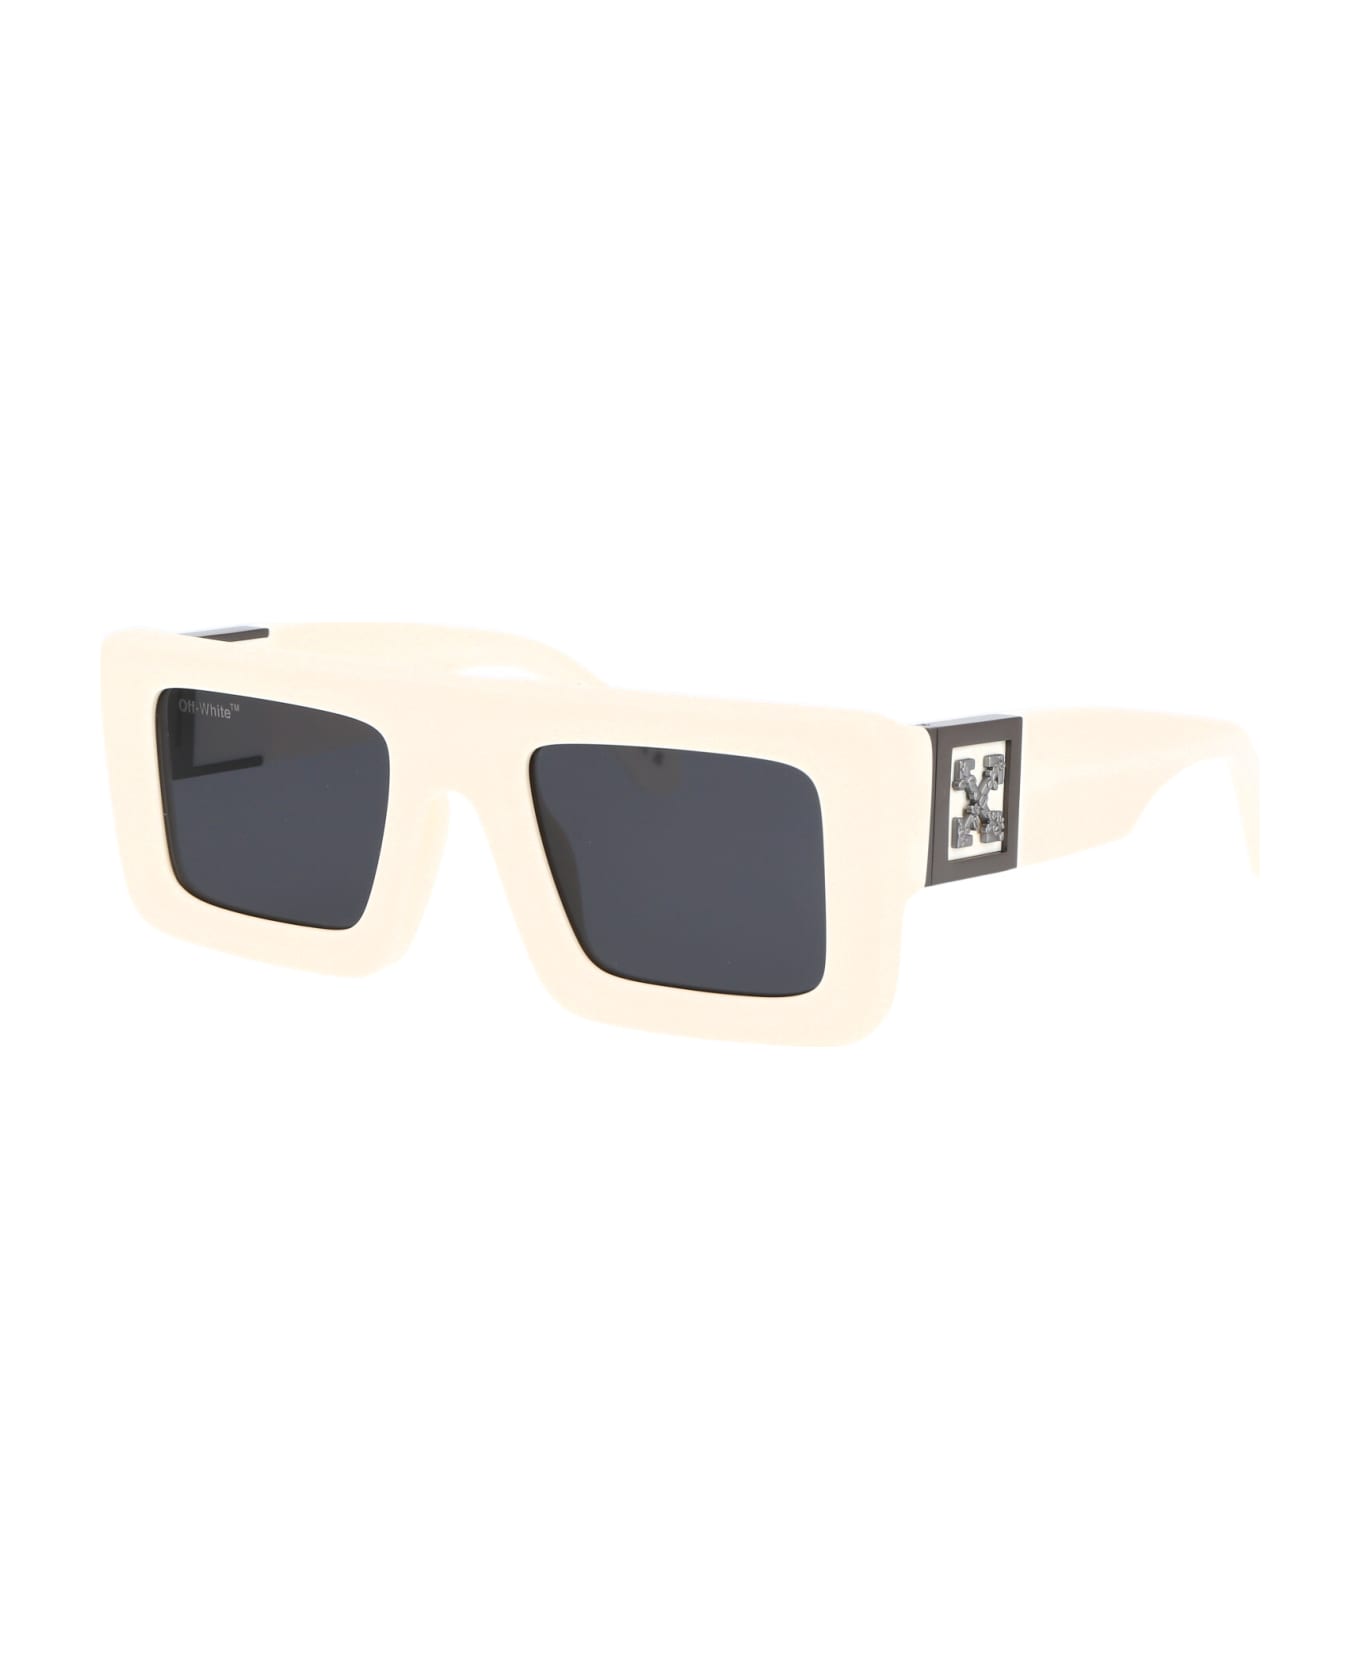 Off-White Leonardo Sunglasses - 0107 WHITE DARK GREY サングラス